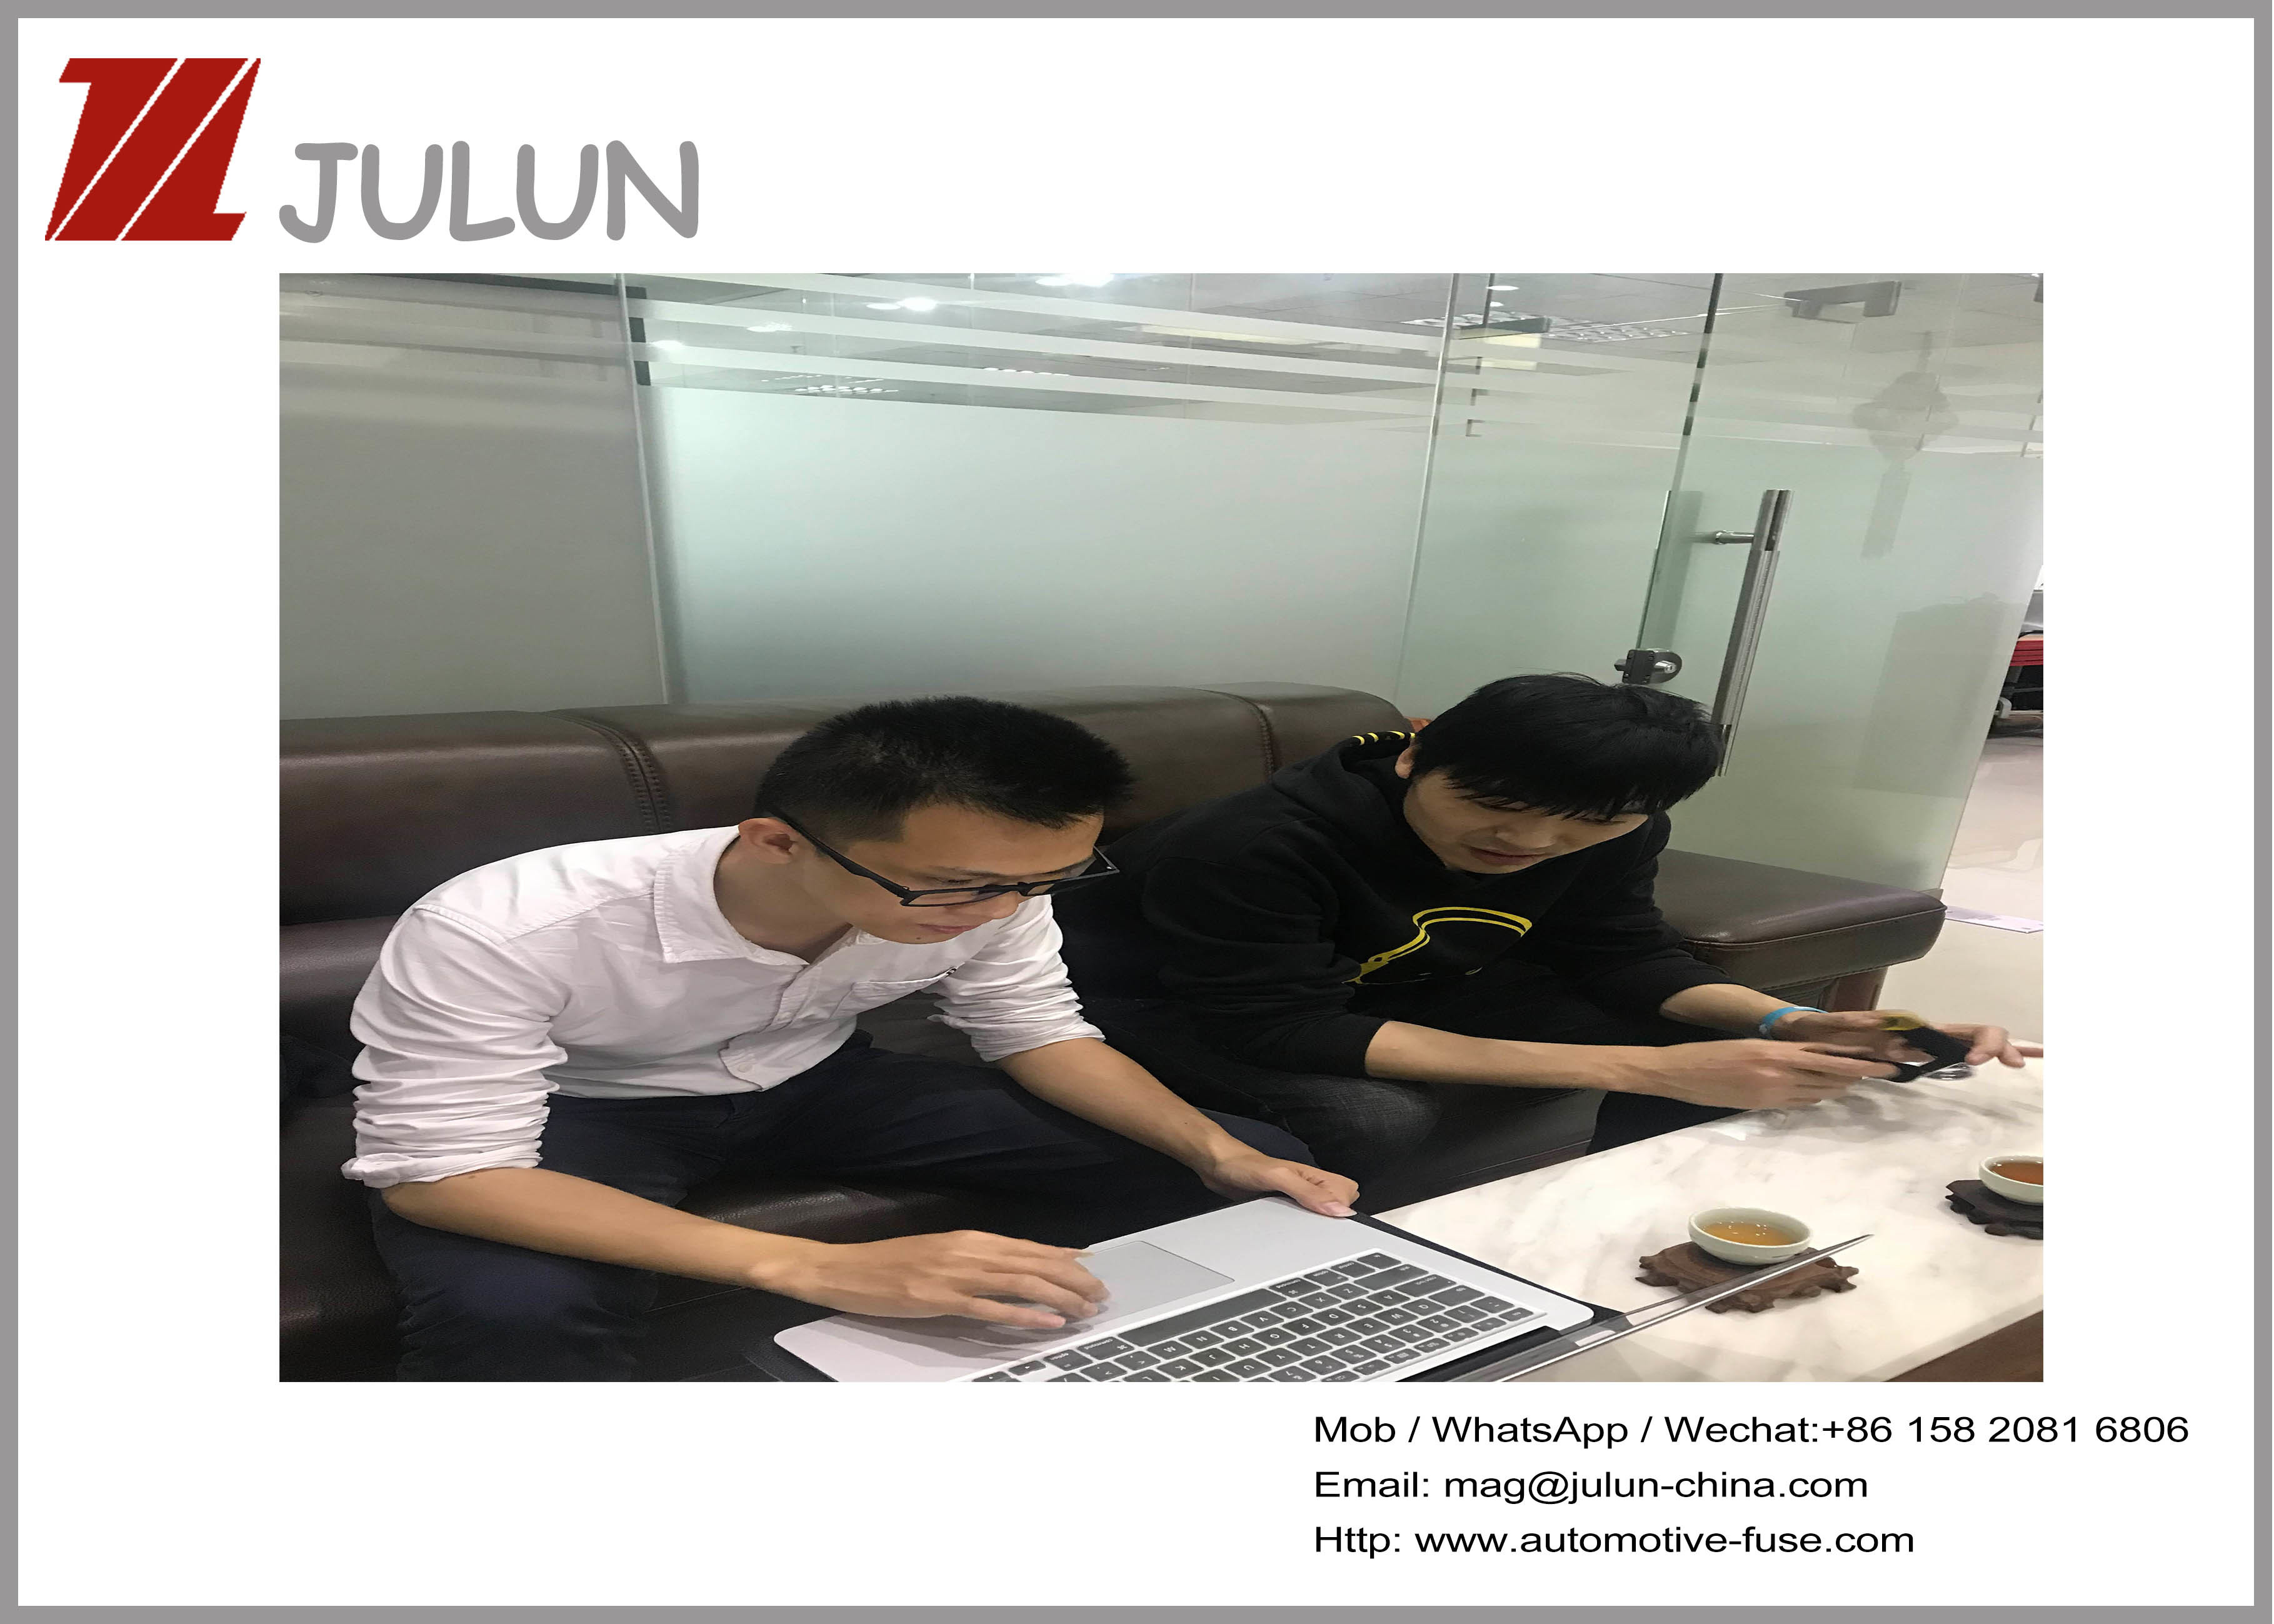 China dongguan Julun  electronics co.,ltd Unternehmensprofil